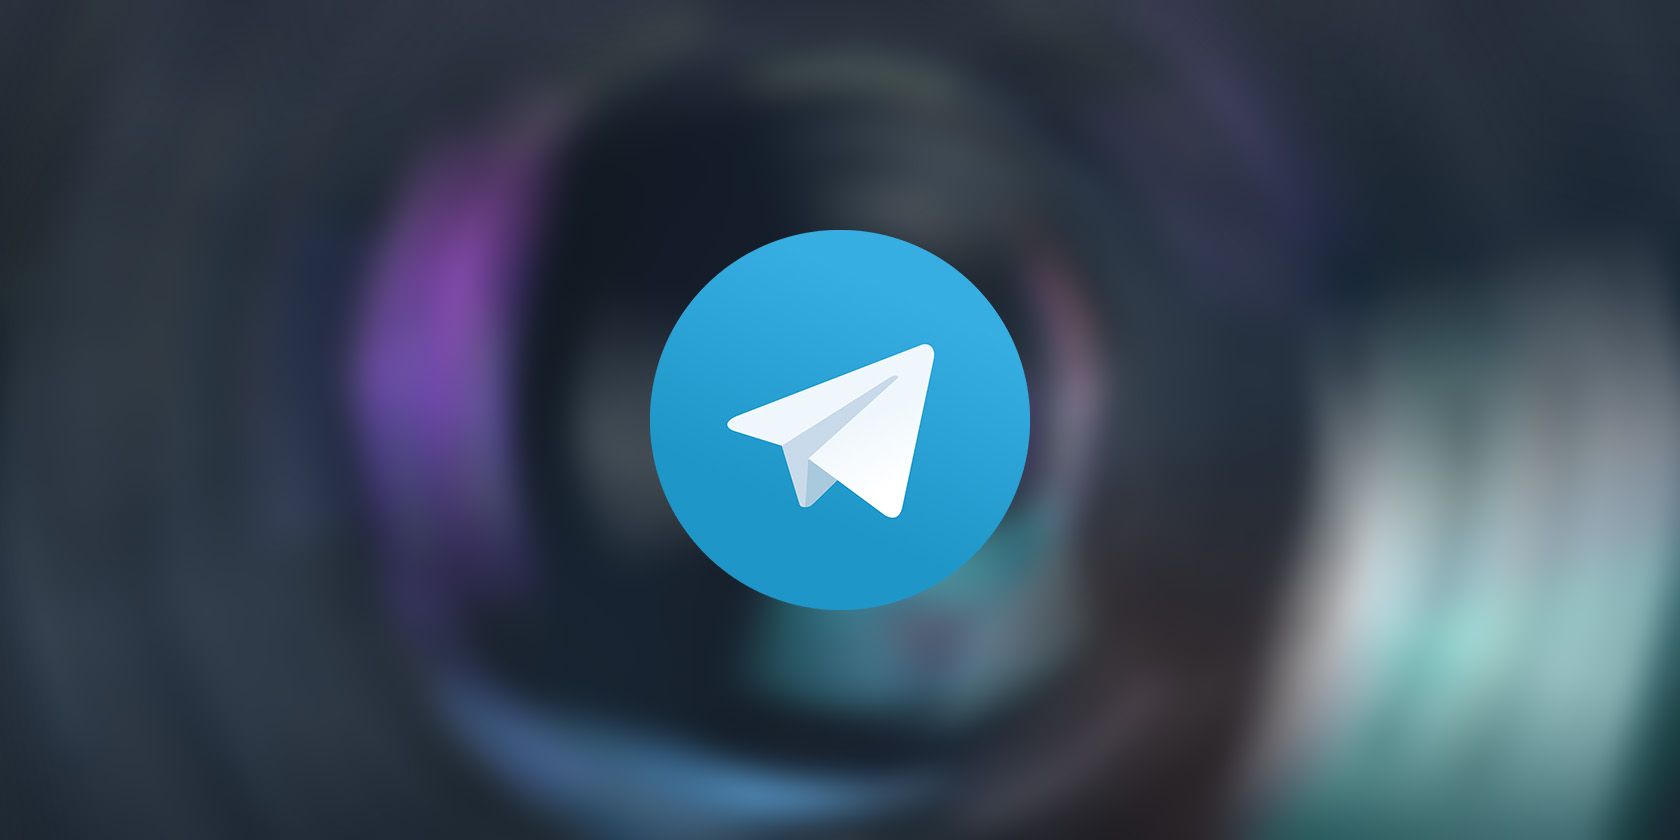 Telegram logo on a blurred background